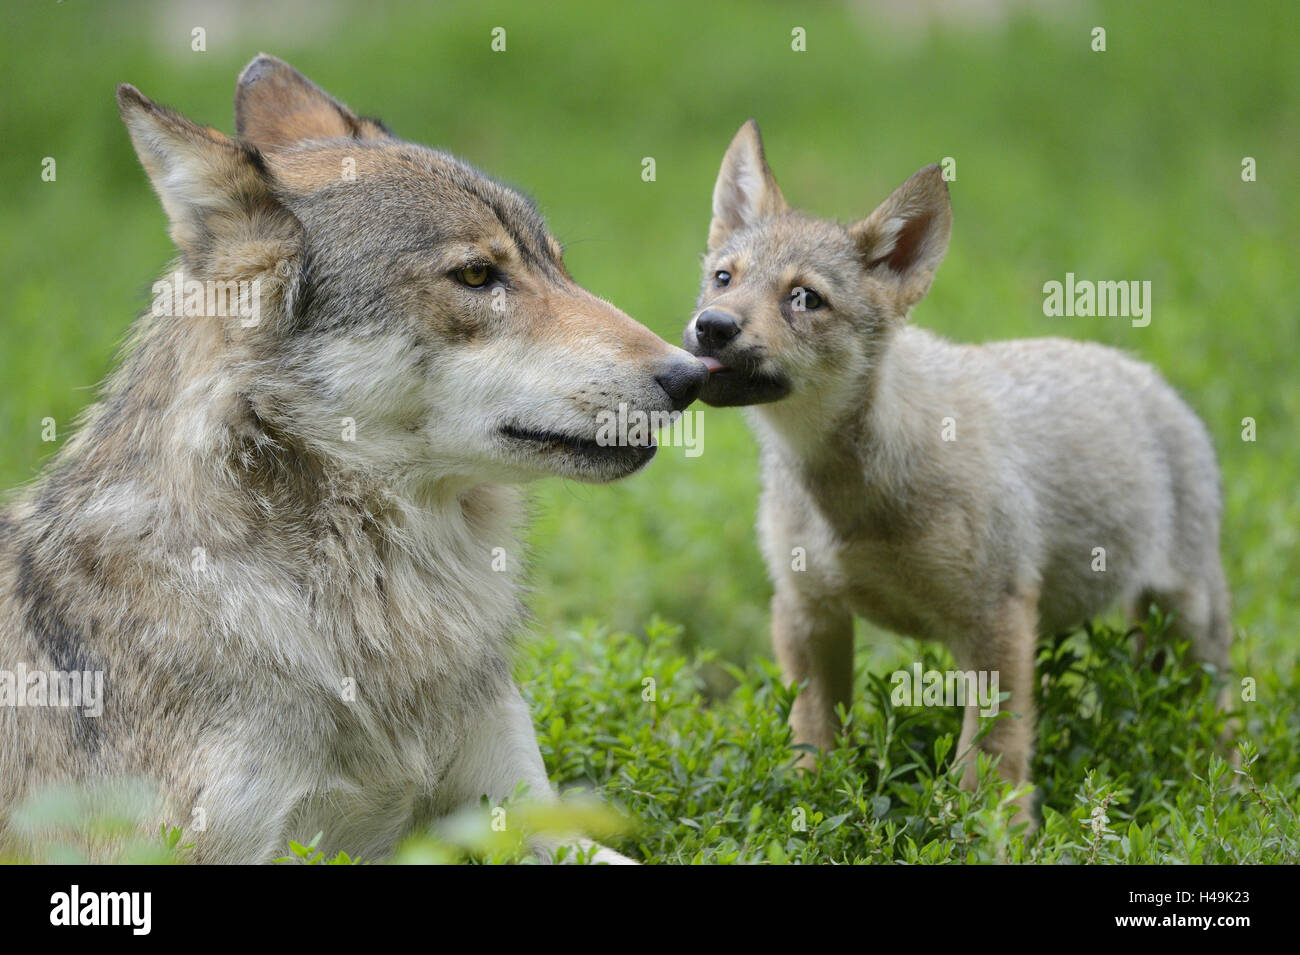 Oriental, lobos Timber Canis lupus lycaon, animal joven, mirando a la cámara, Foto de stock